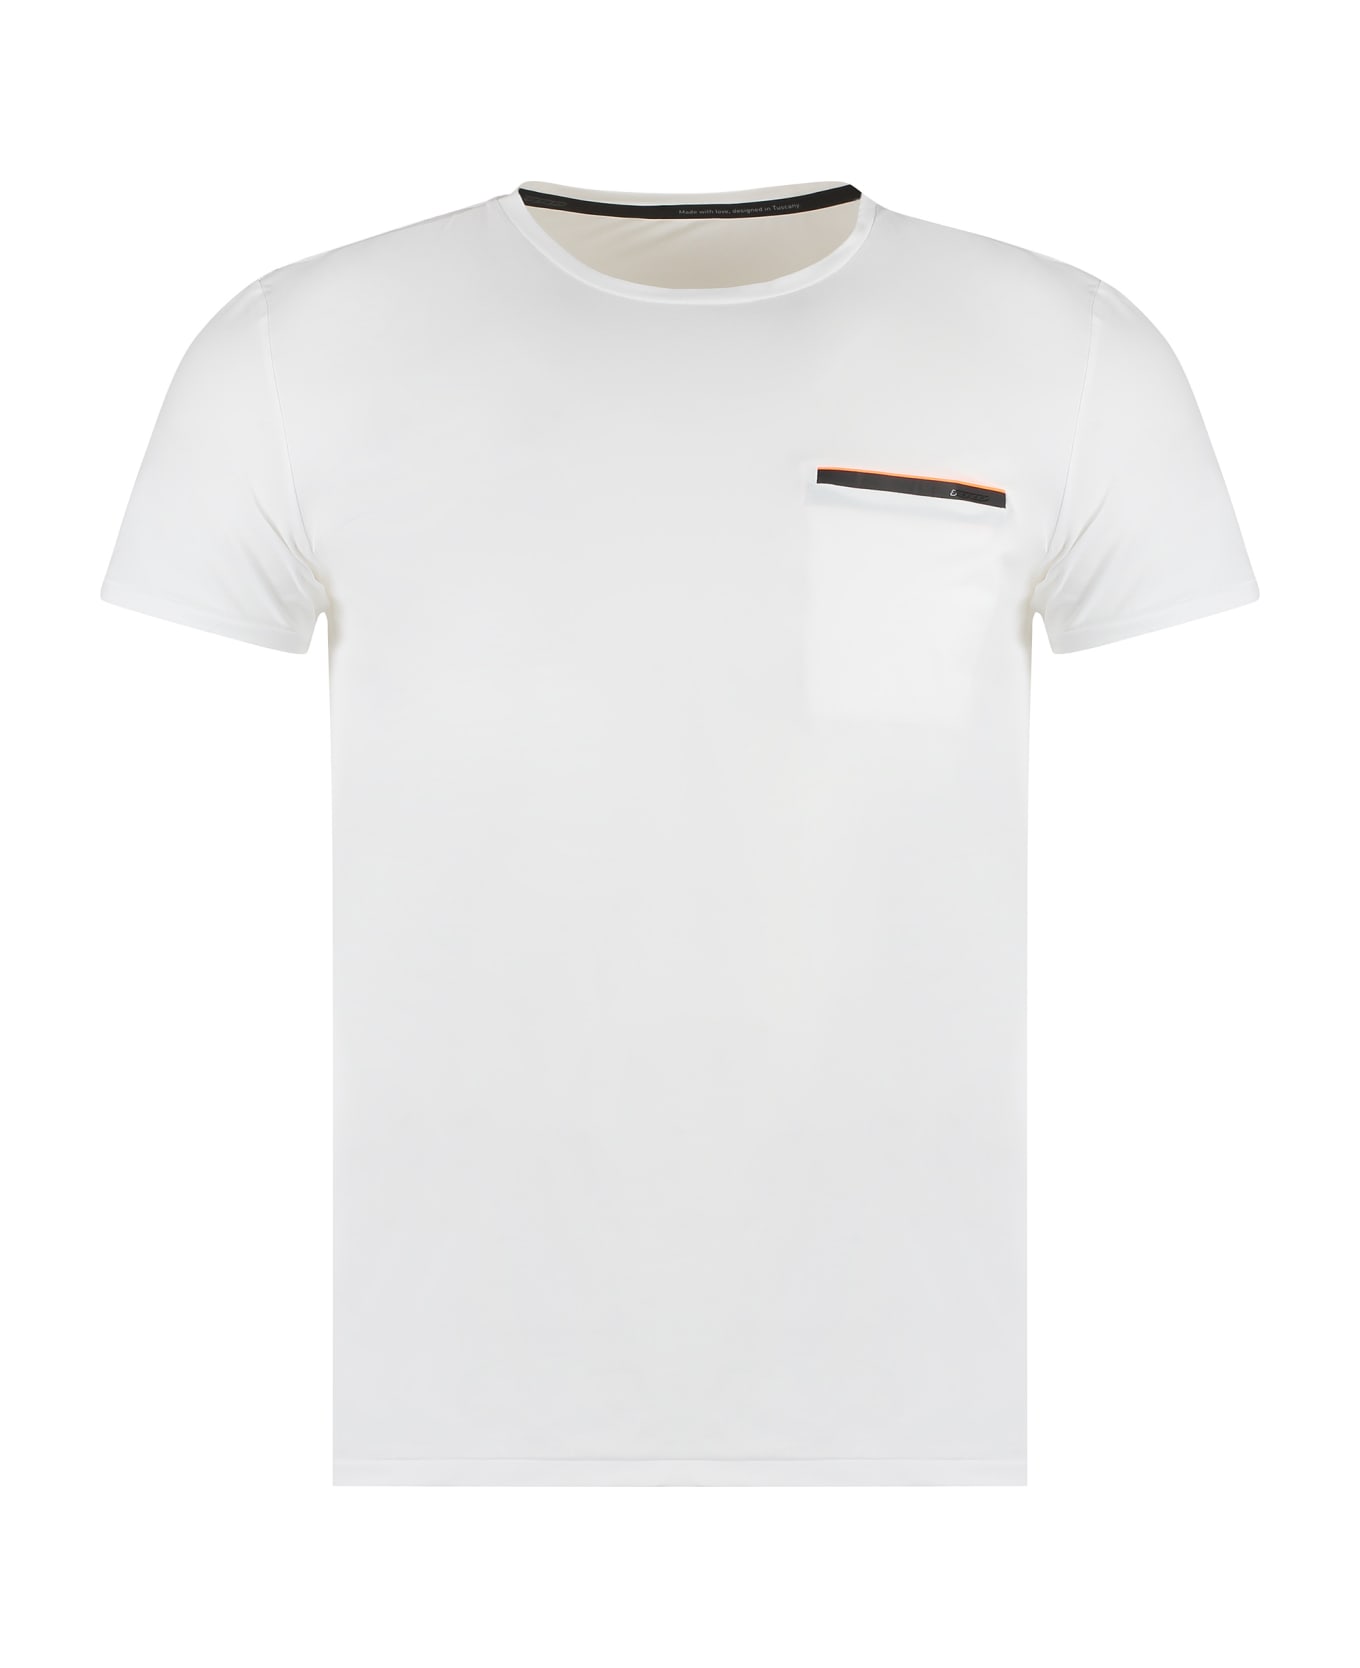 RRD - Roberto Ricci Design Techno Fabric T-shirt - Bianco シャツ